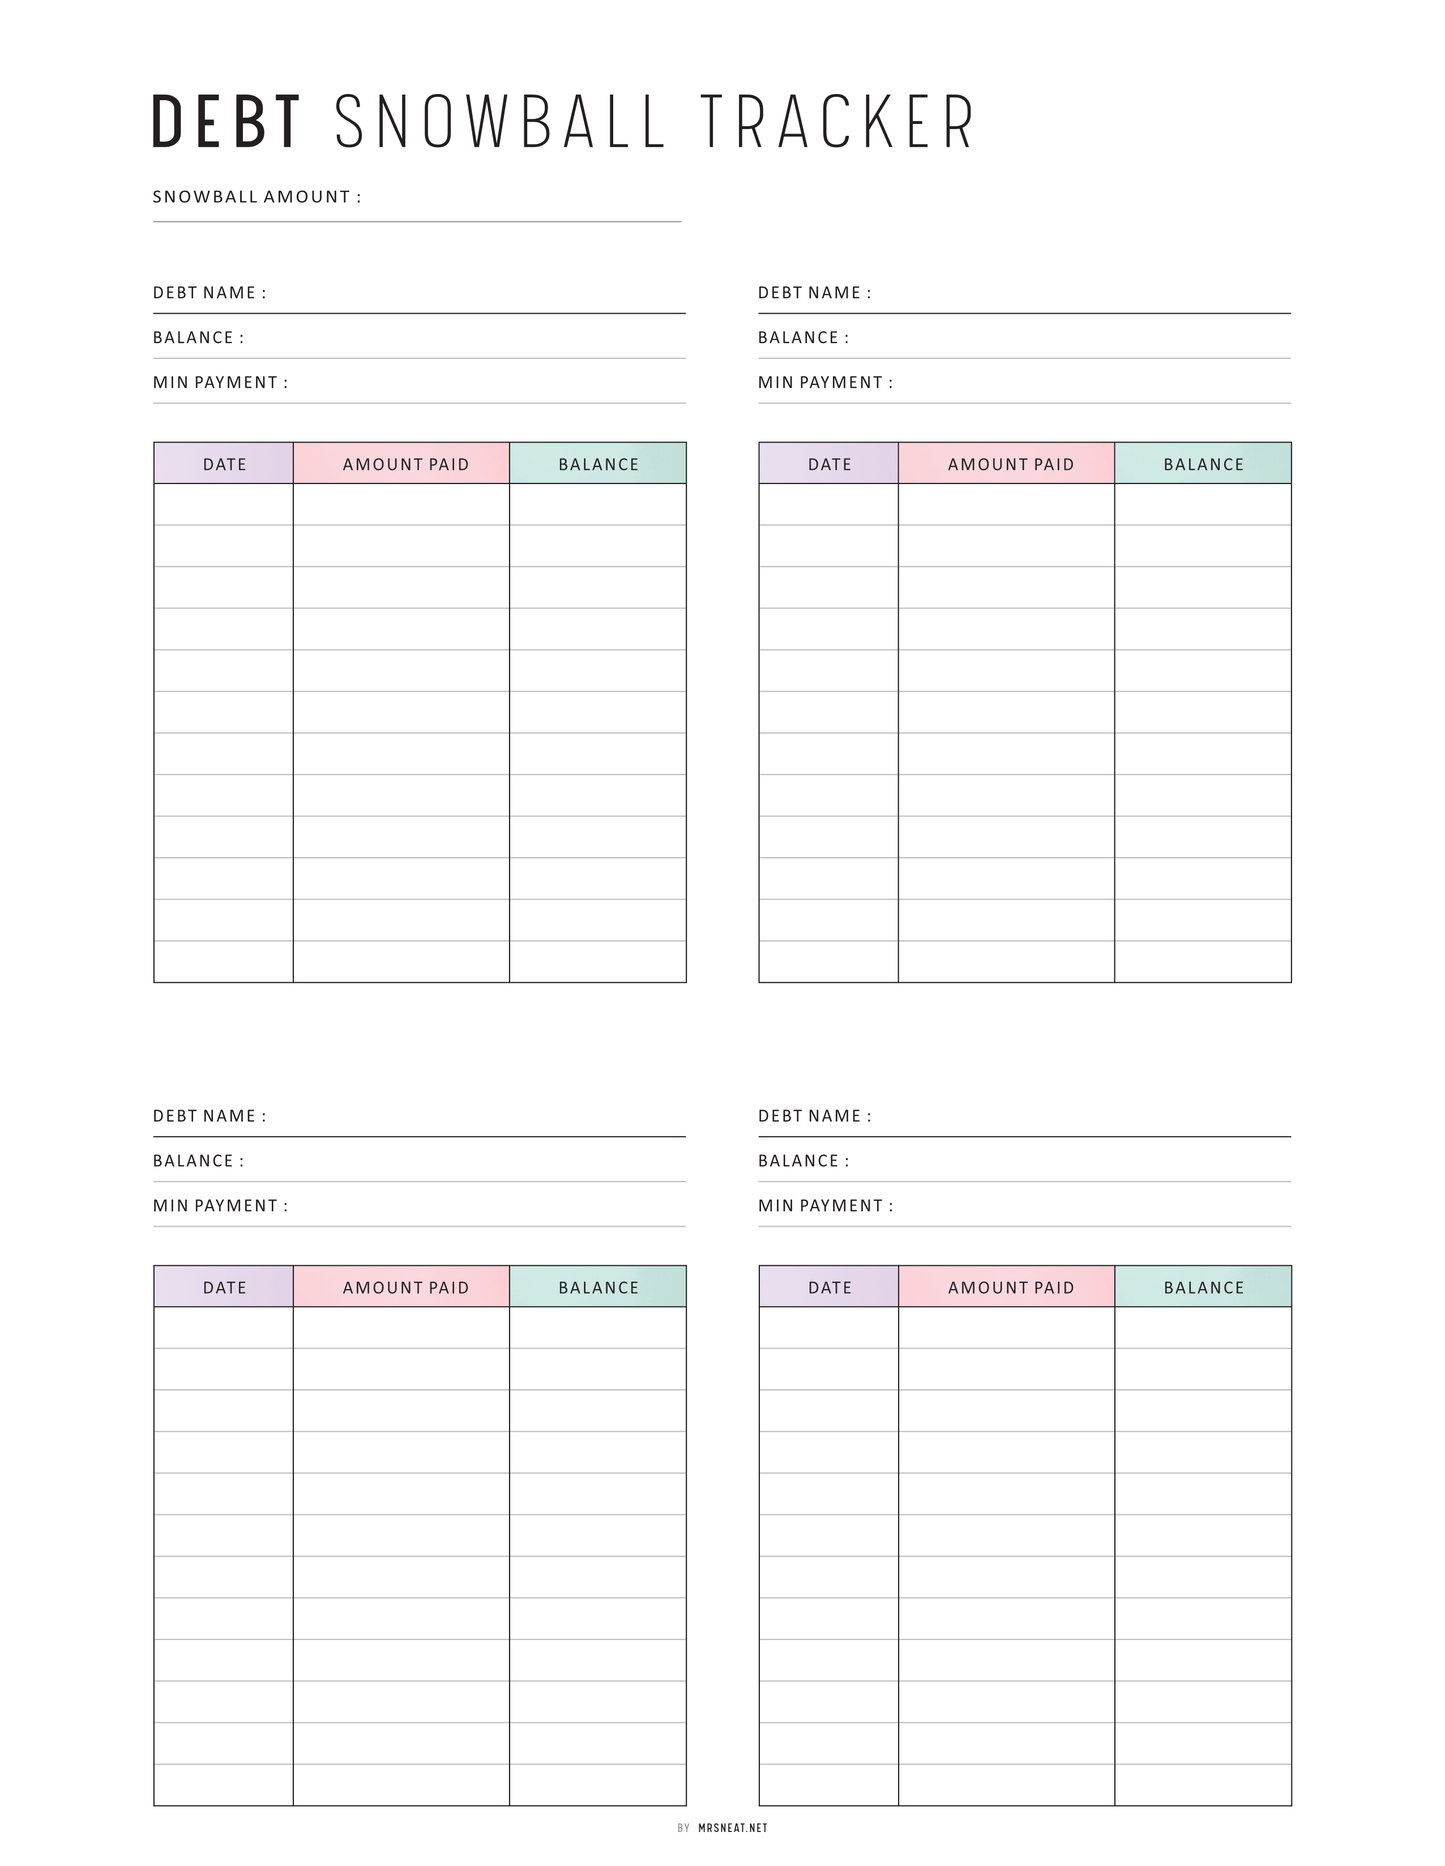 Minimalist Debt Snowball Tracker, Printable, A4, A5, Letter, Half Letter, PDF, Digital Planner, 2 Colors, Instant Download